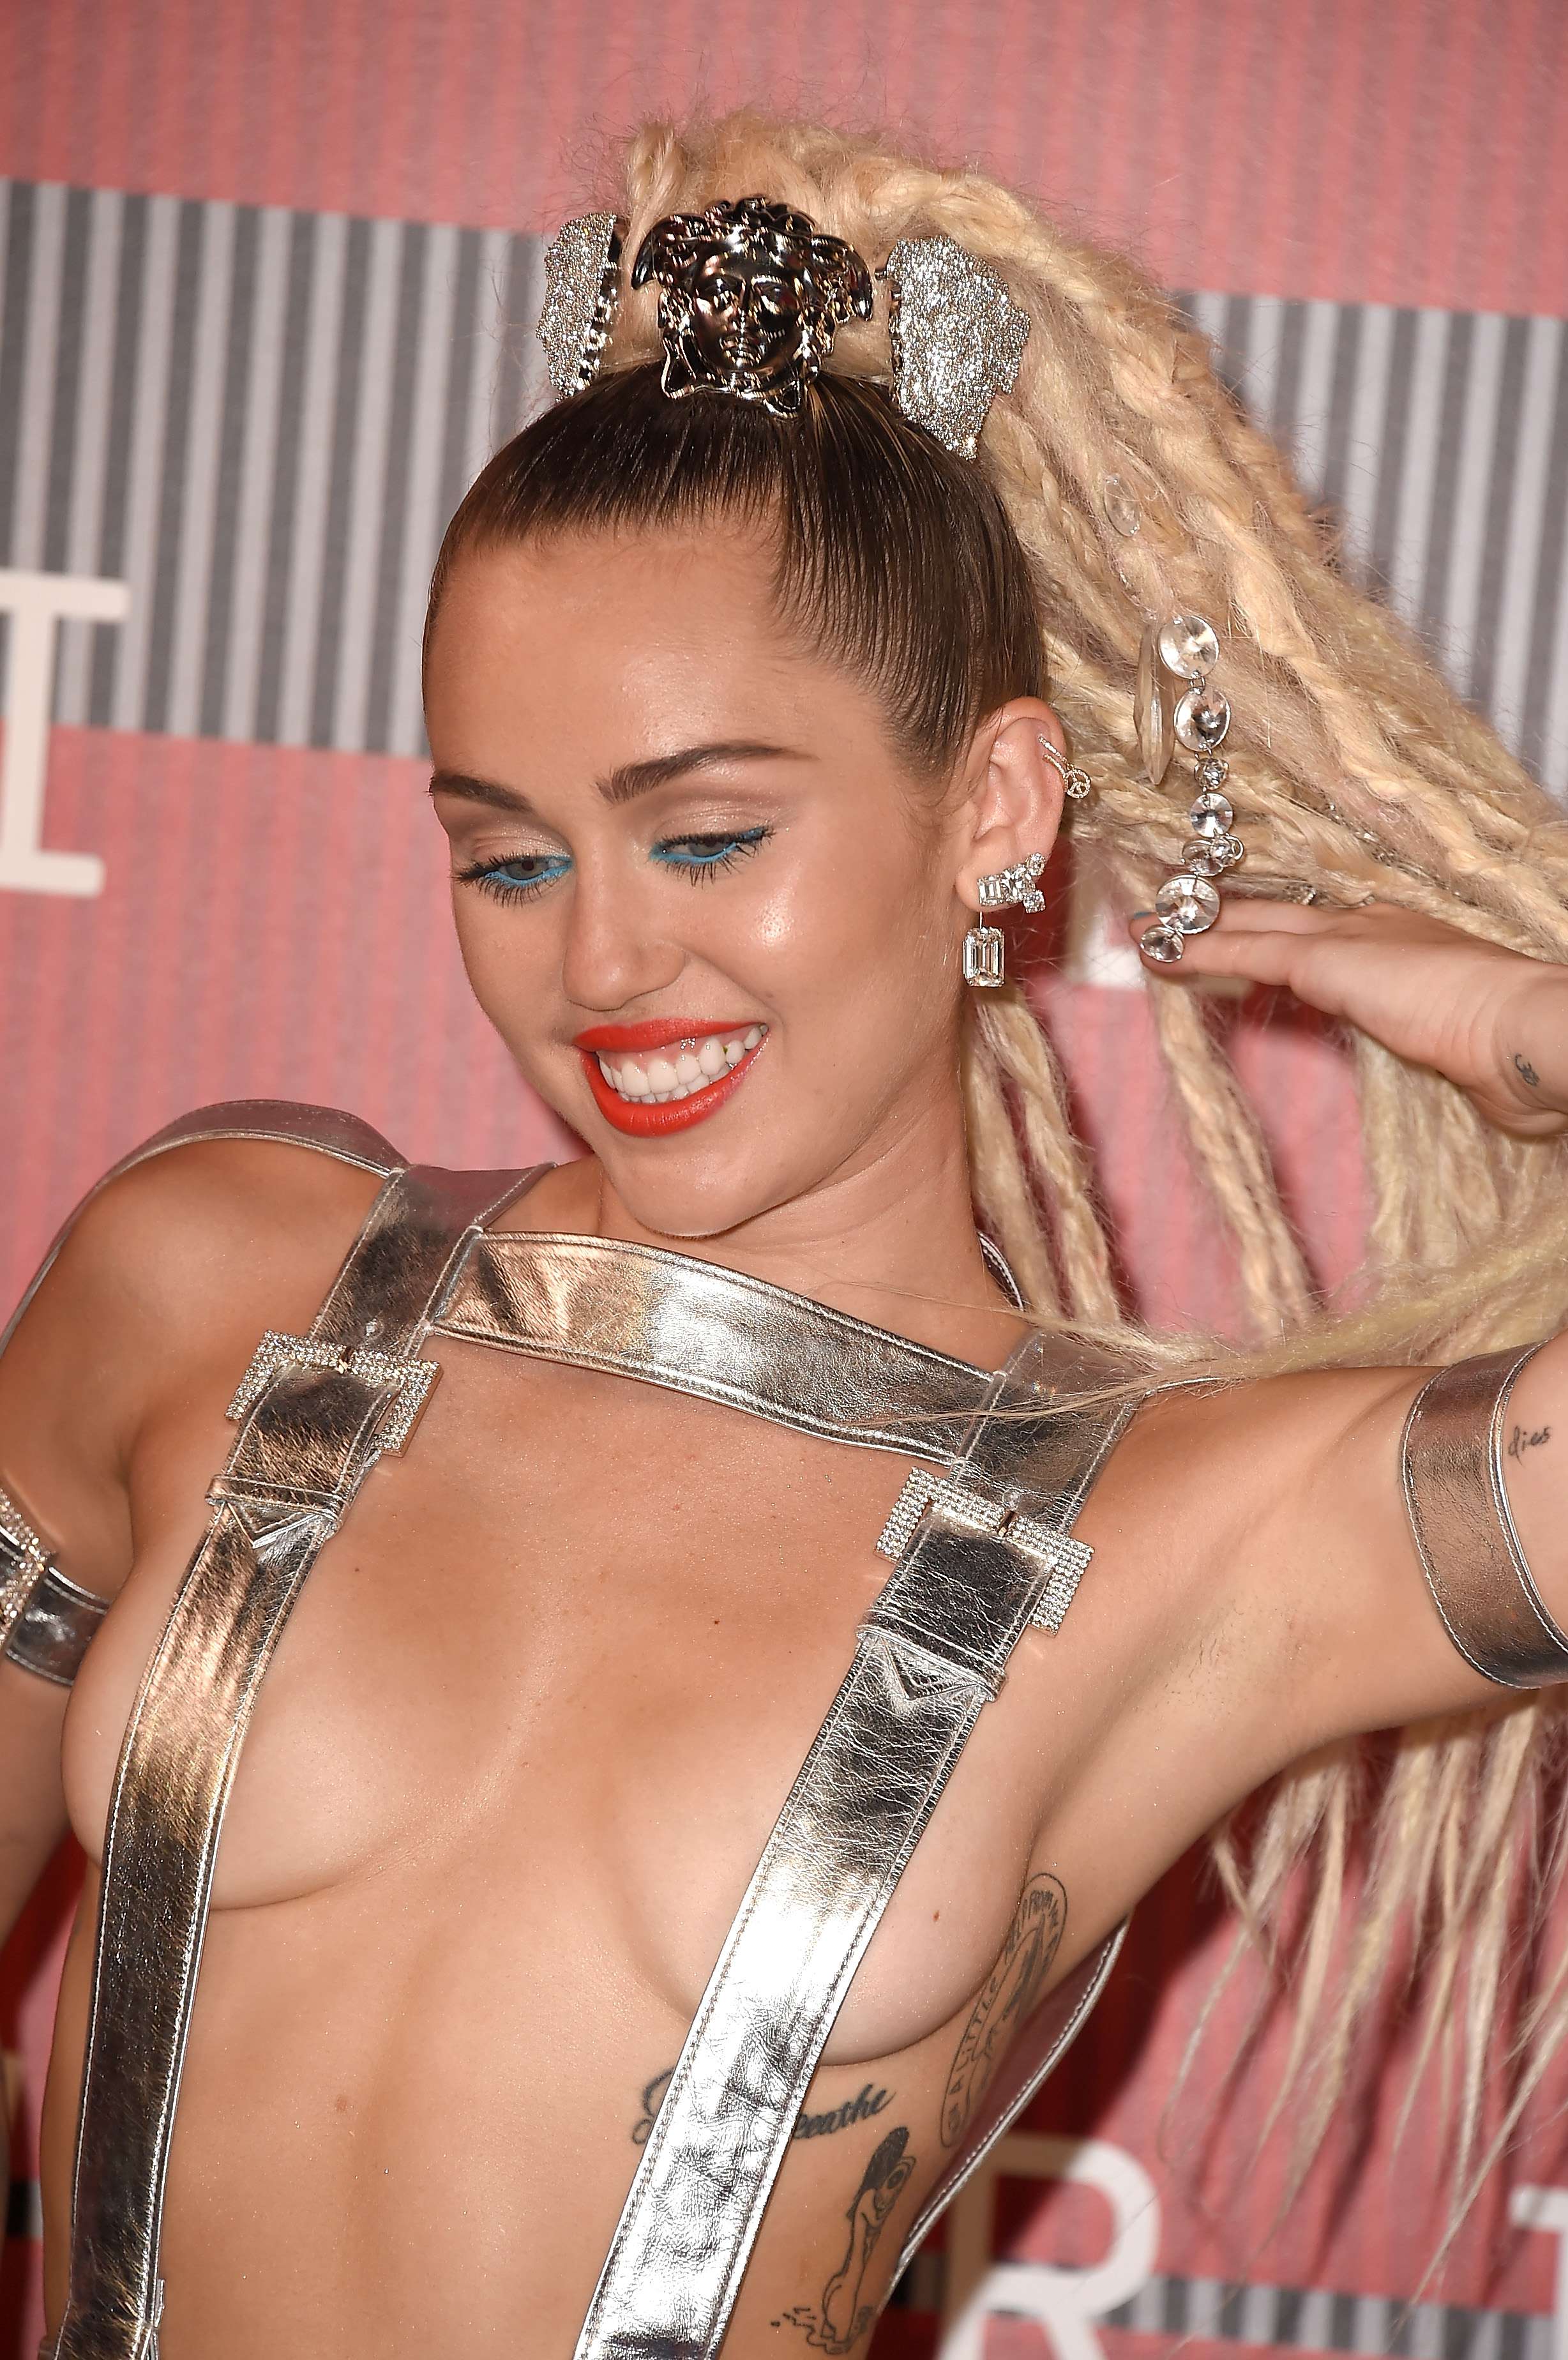 cyrus tape 2016 sex Miley